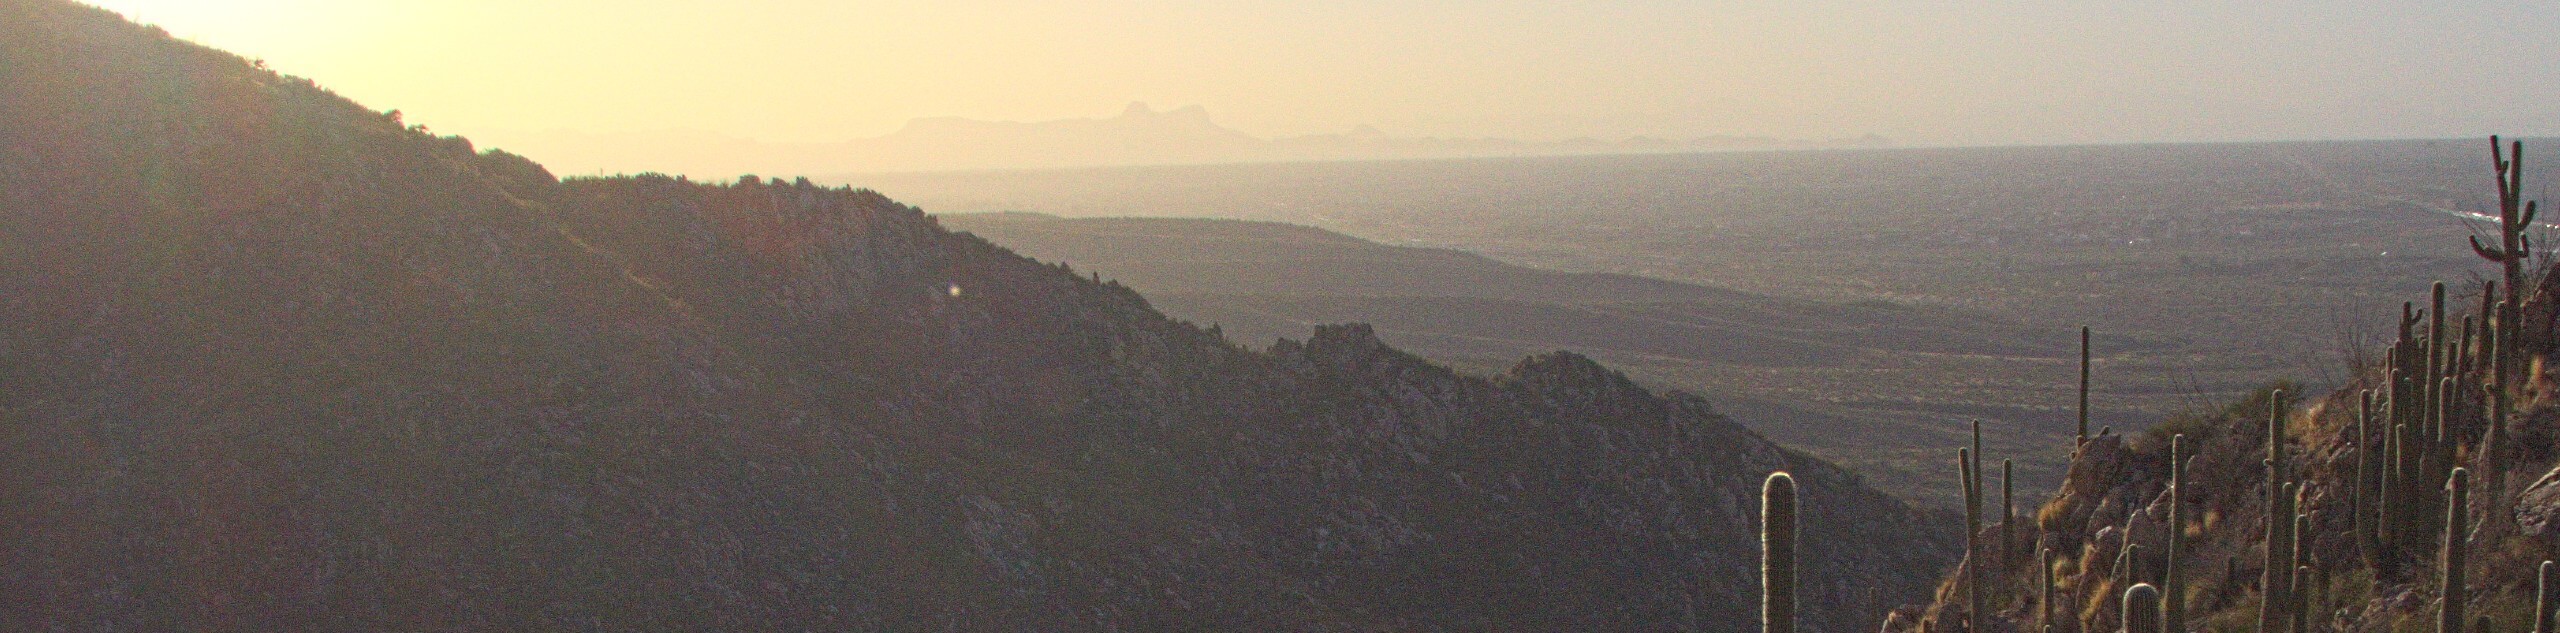 Romero Canyon Trail